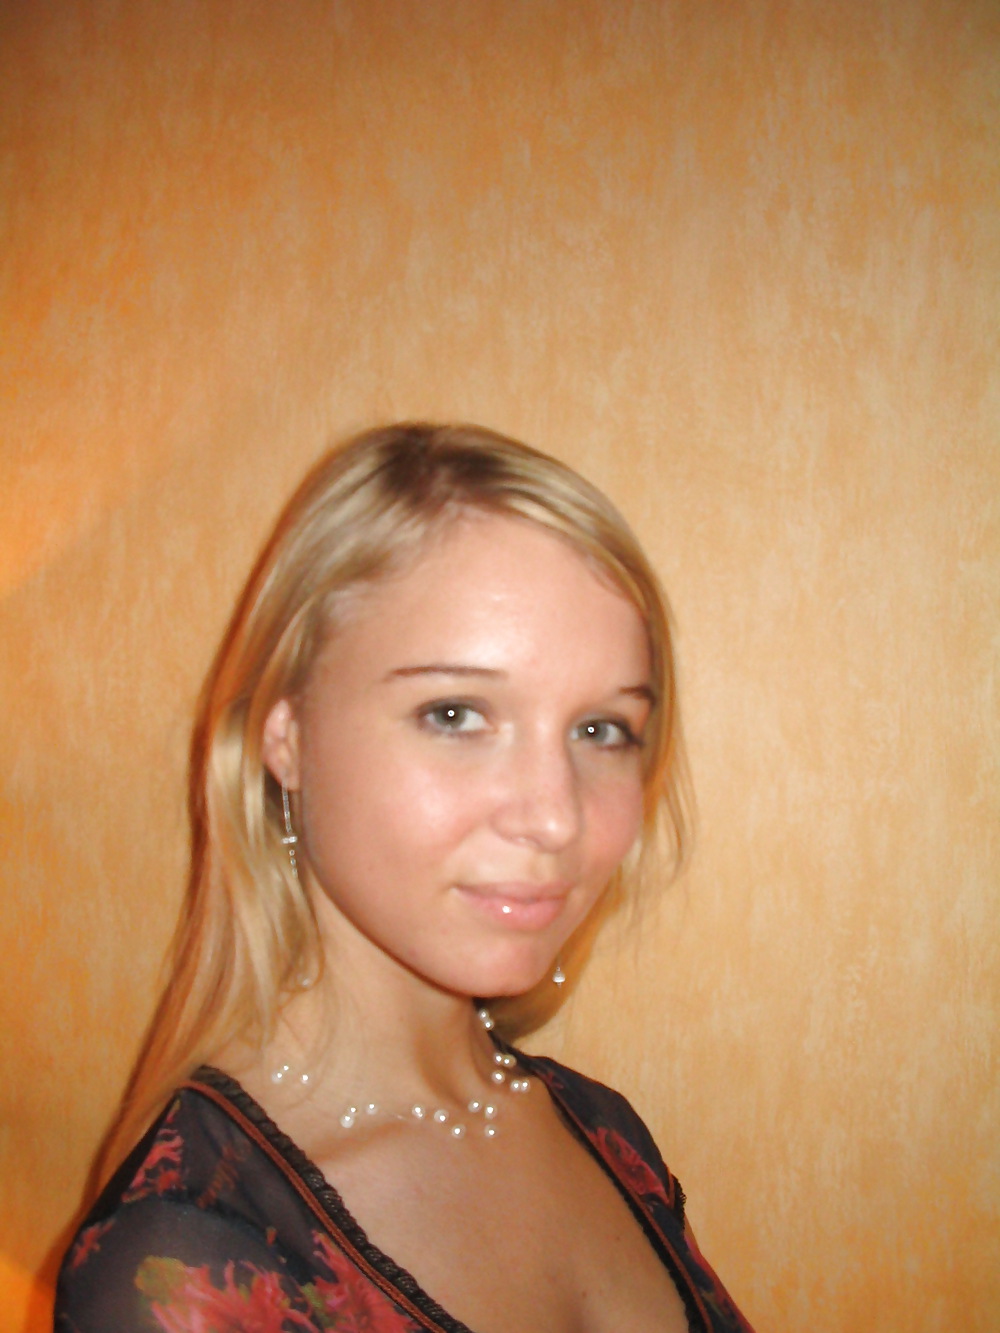 Sexy Blonde German Teen Poses In Lingerie #24813796